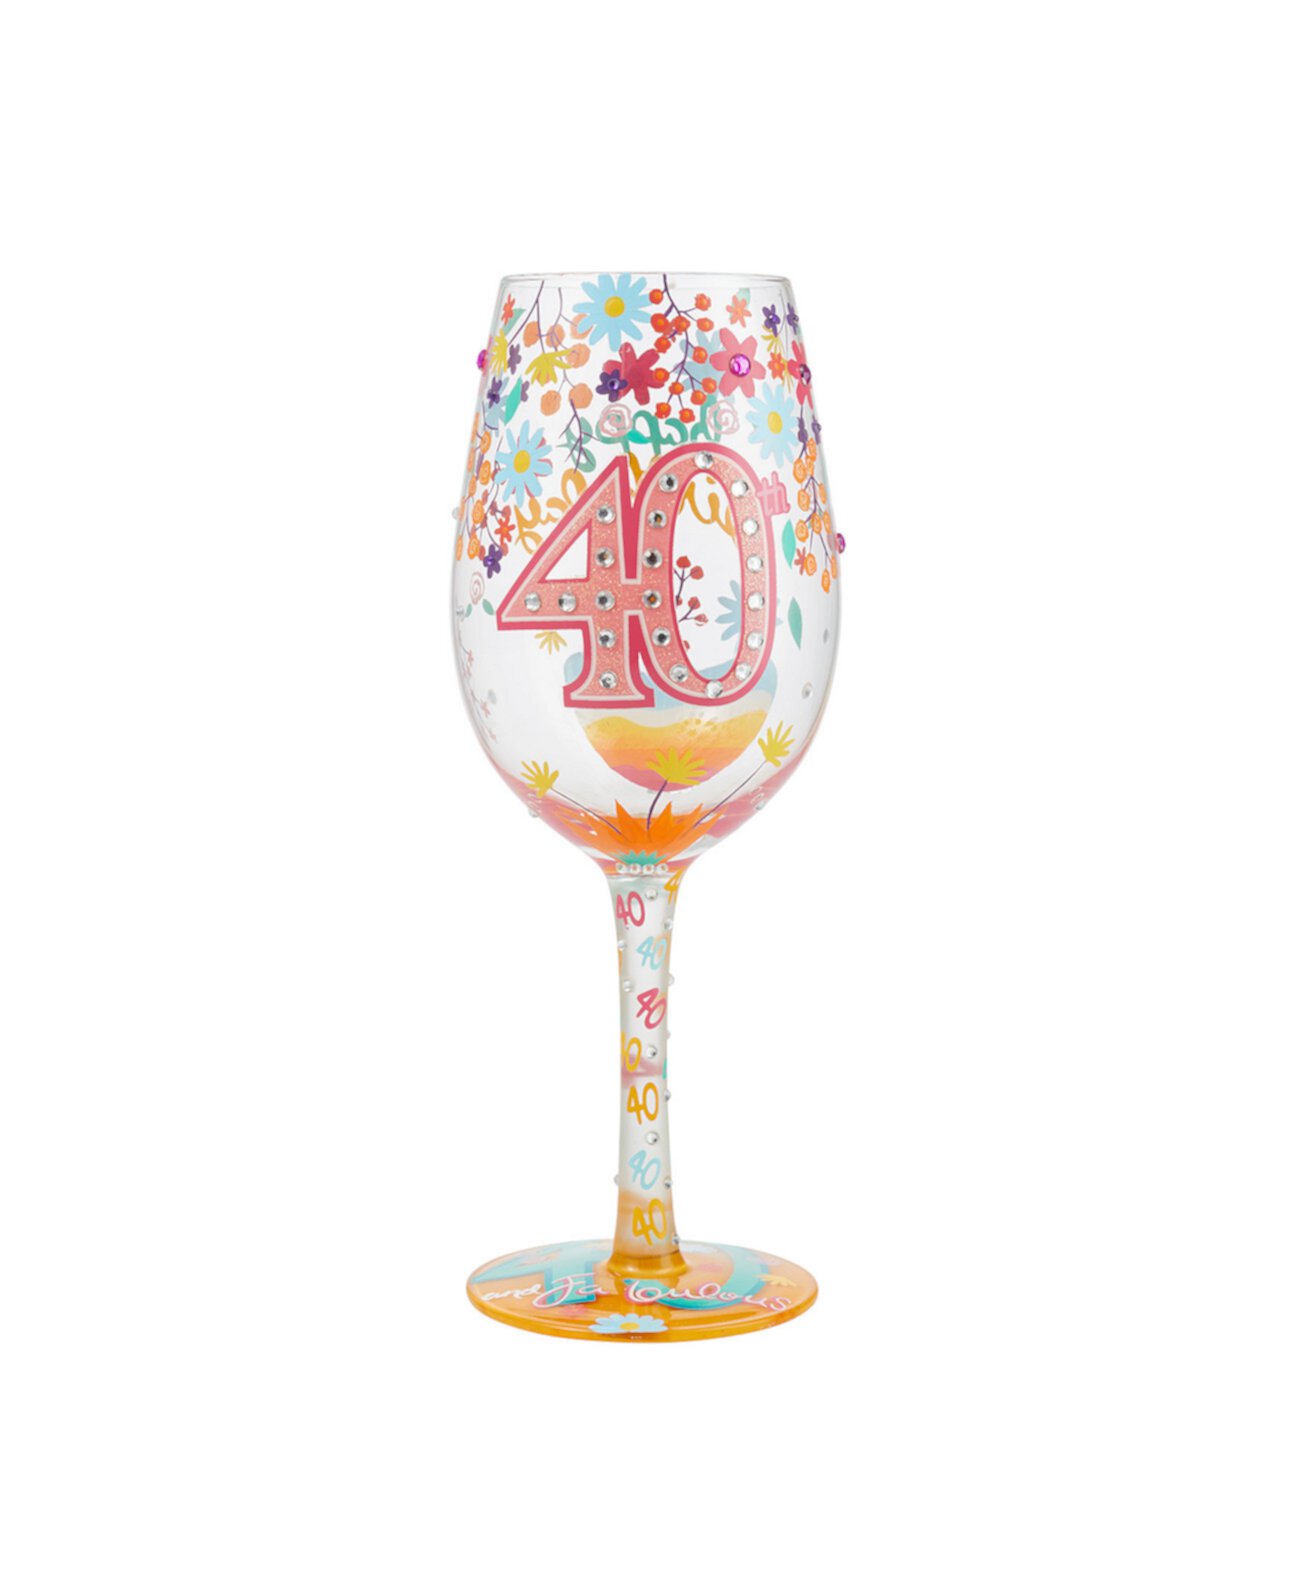 Бокал для вина Lolita Happy 40th Birthday, 16 унций Enesco